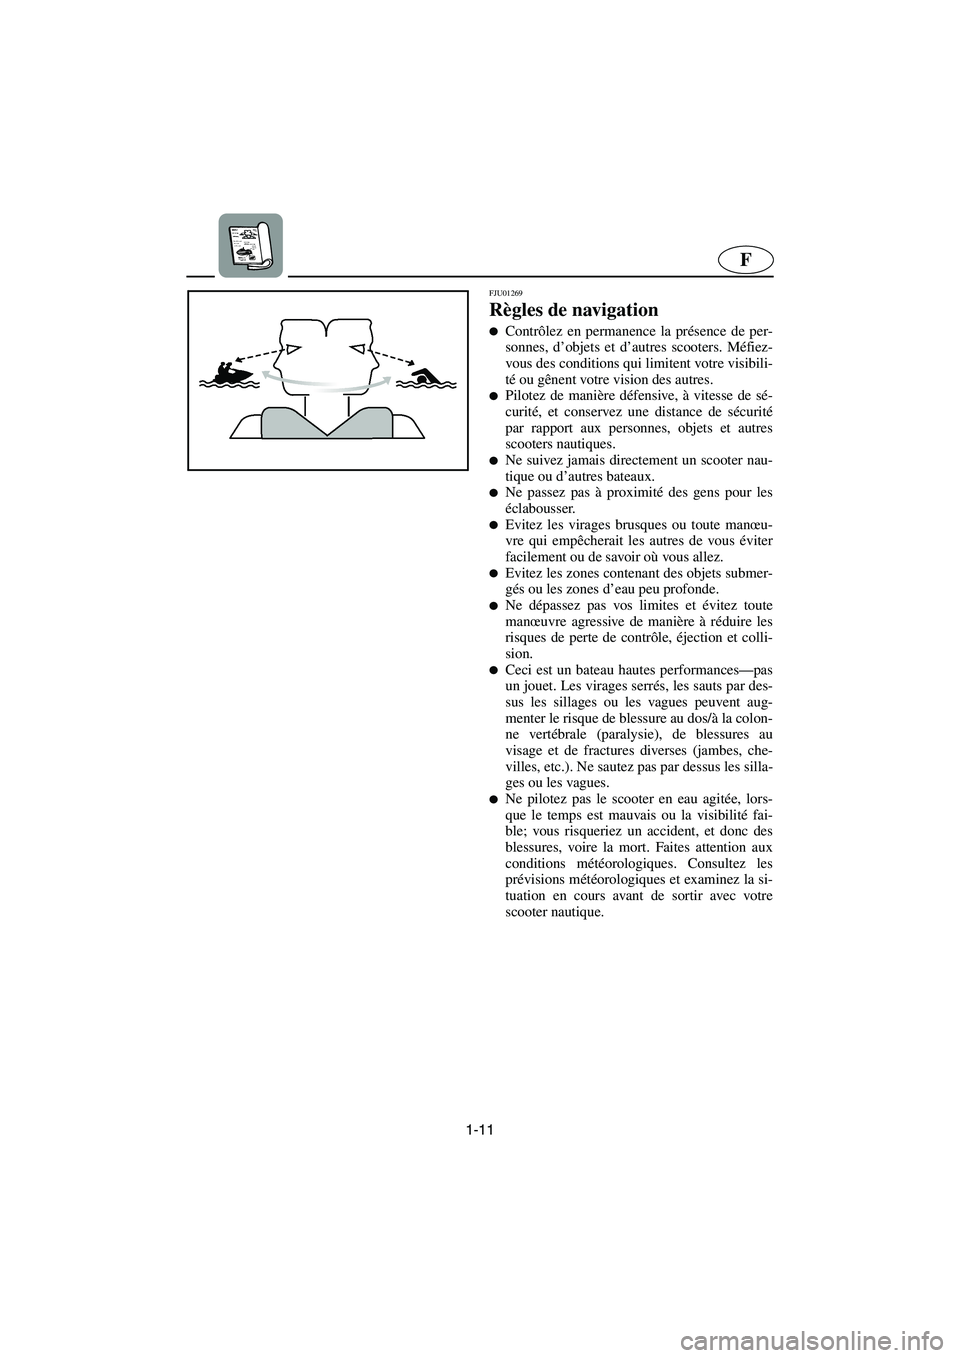 YAMAHA SUPERJET 2003  Manuale de Empleo (in Spanish) 1-11
F
FJU01269 
Règles de navigation  
Contrôlez en permanence la présence de per-
sonnes, d’objets et d’autres scooters. Méfiez-
vous des conditions qui limitent votre visibili-
té ou gên